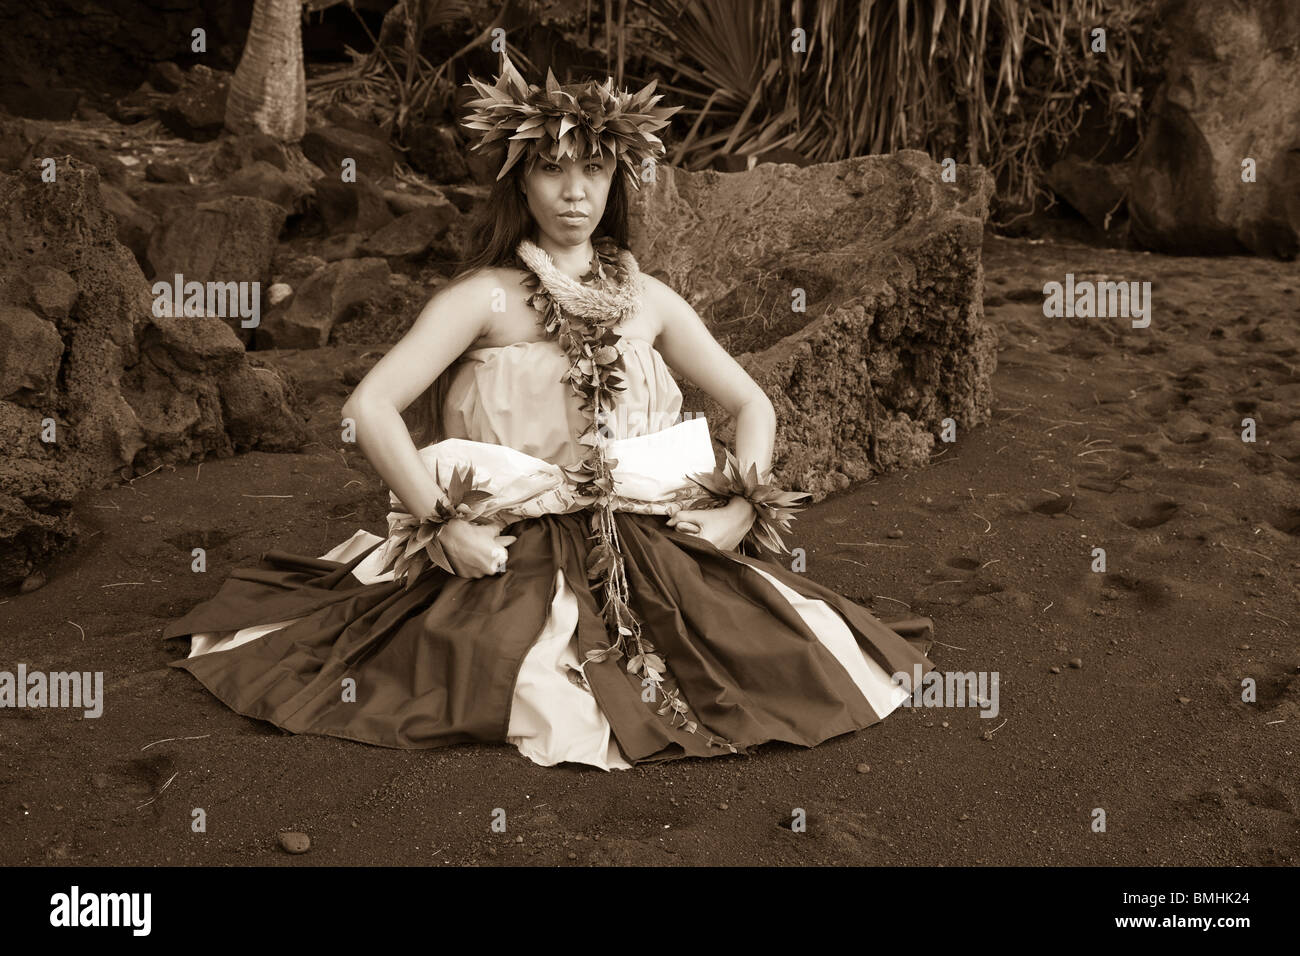 Female Hawaiian hula dancer Stock Photo